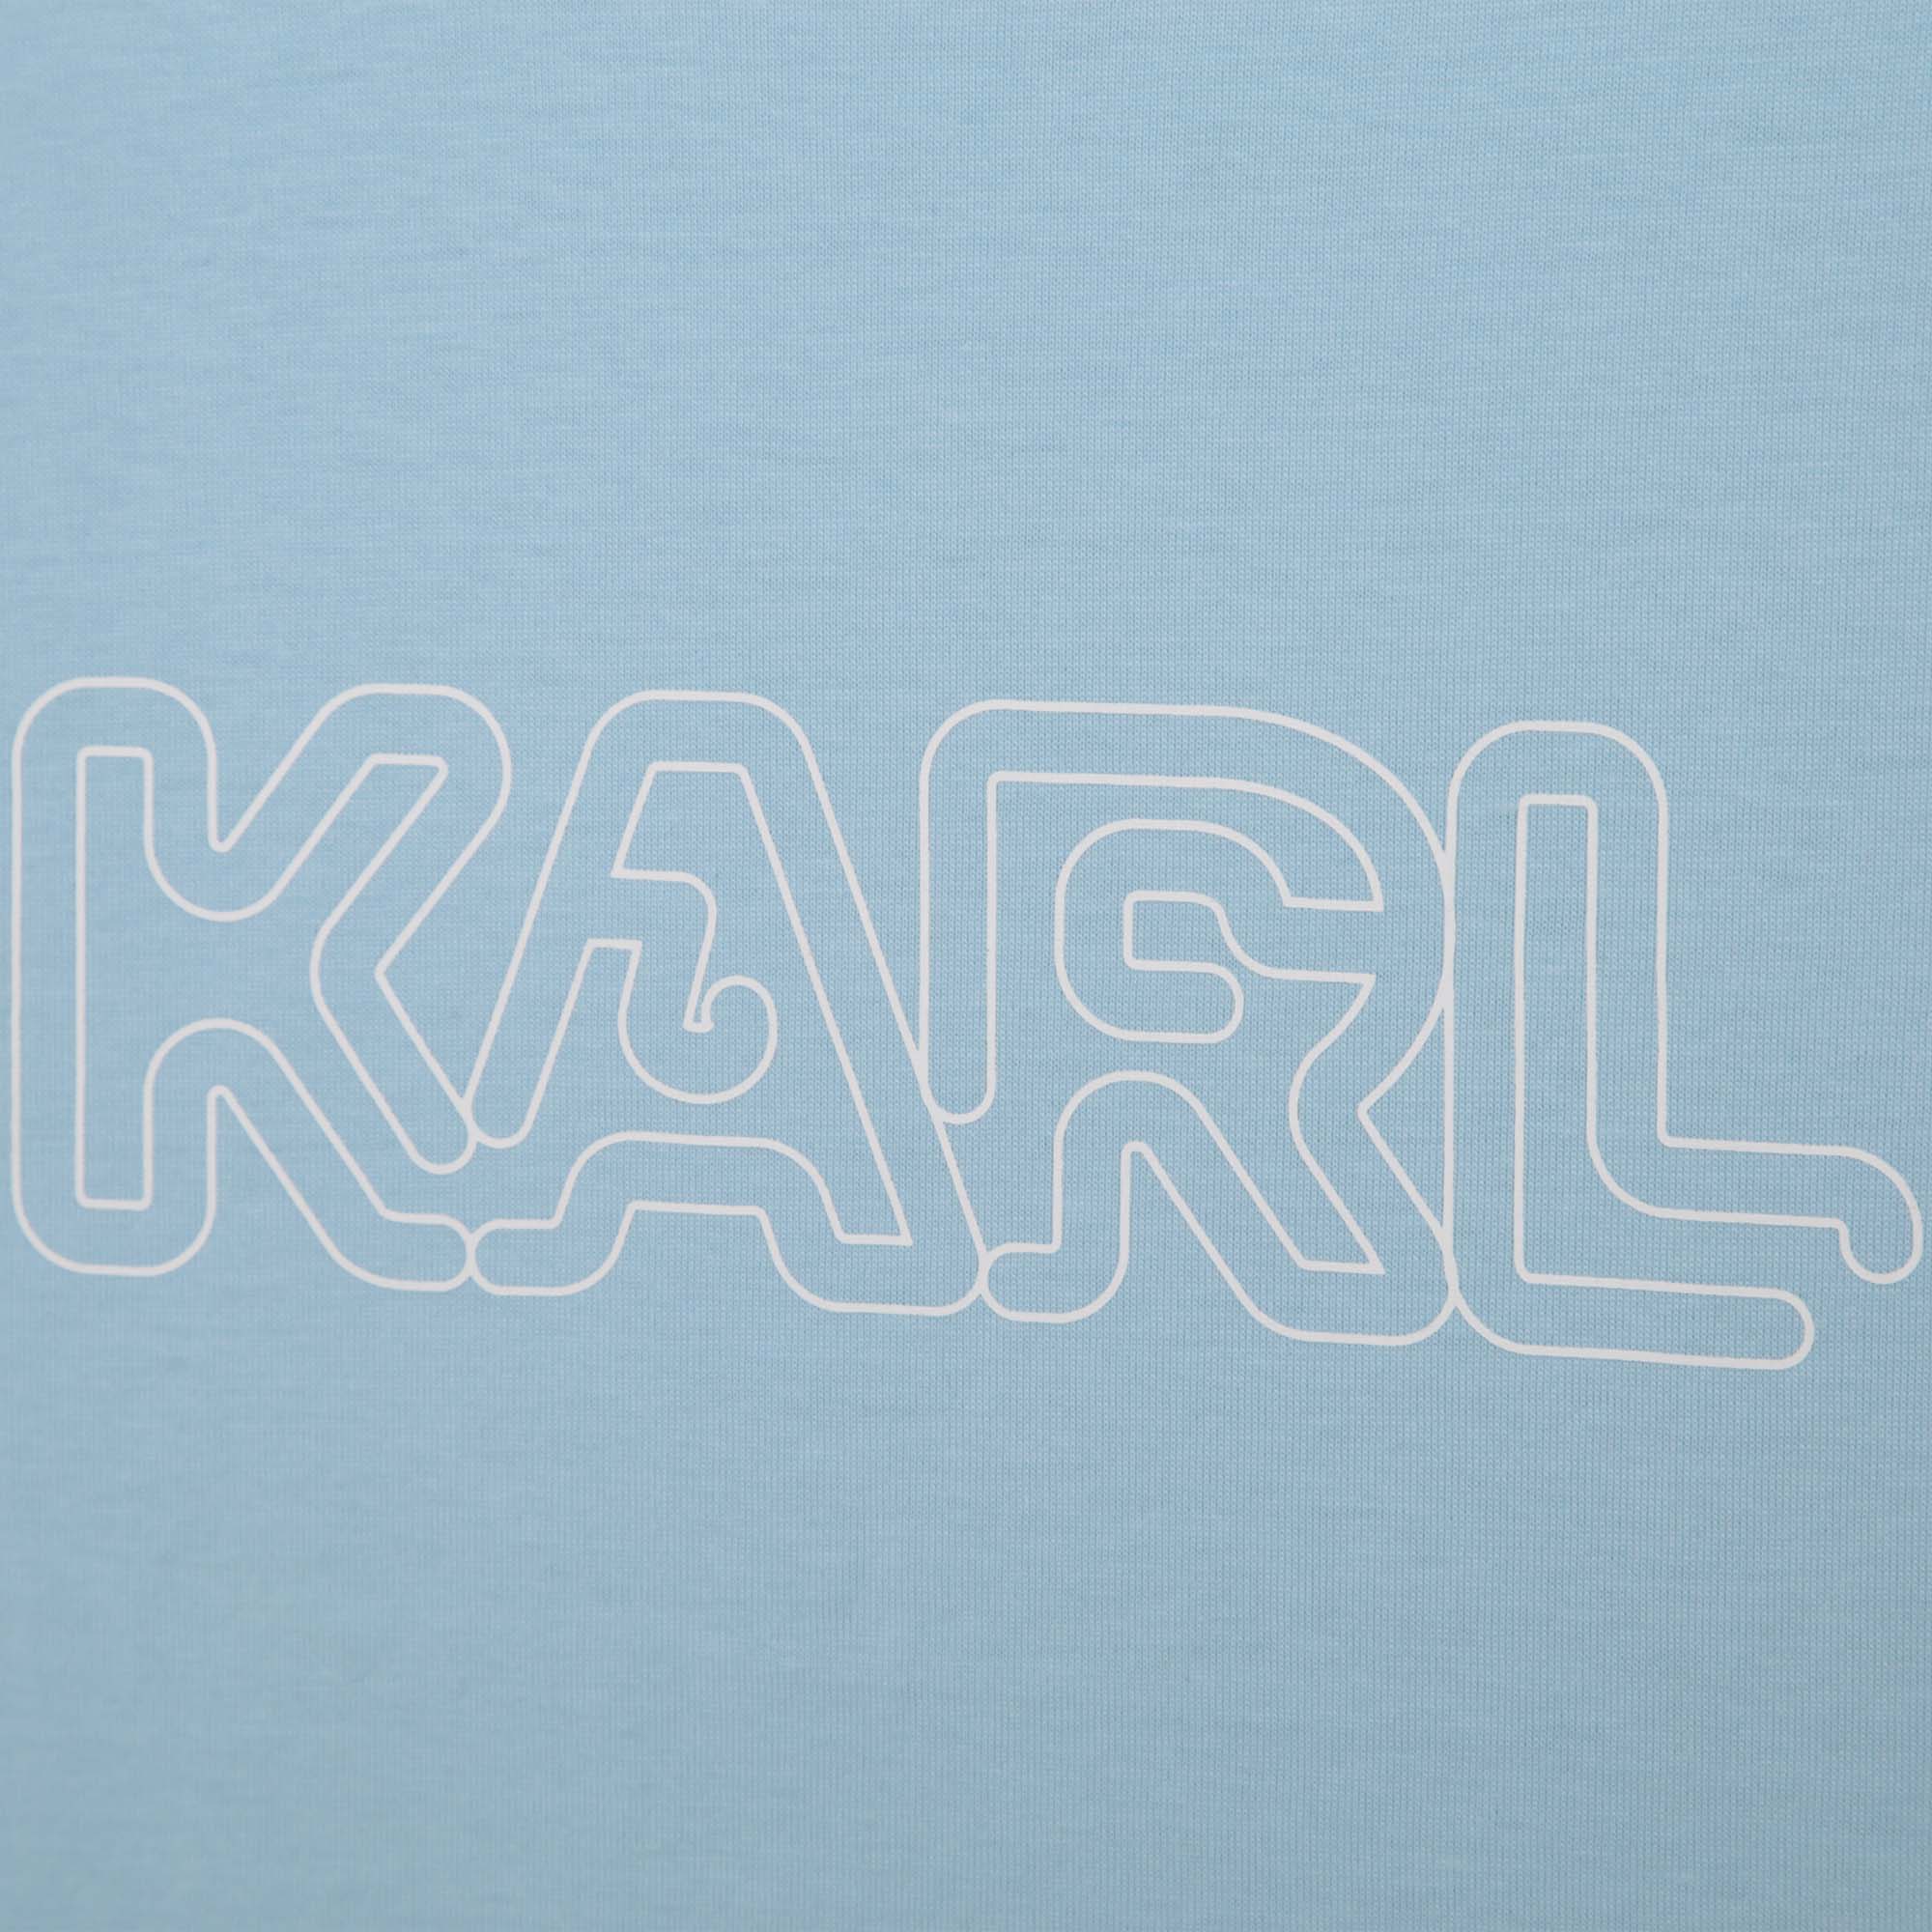 Camiseta de tirantes KARL LARGERFELD KIDS para NIÑO